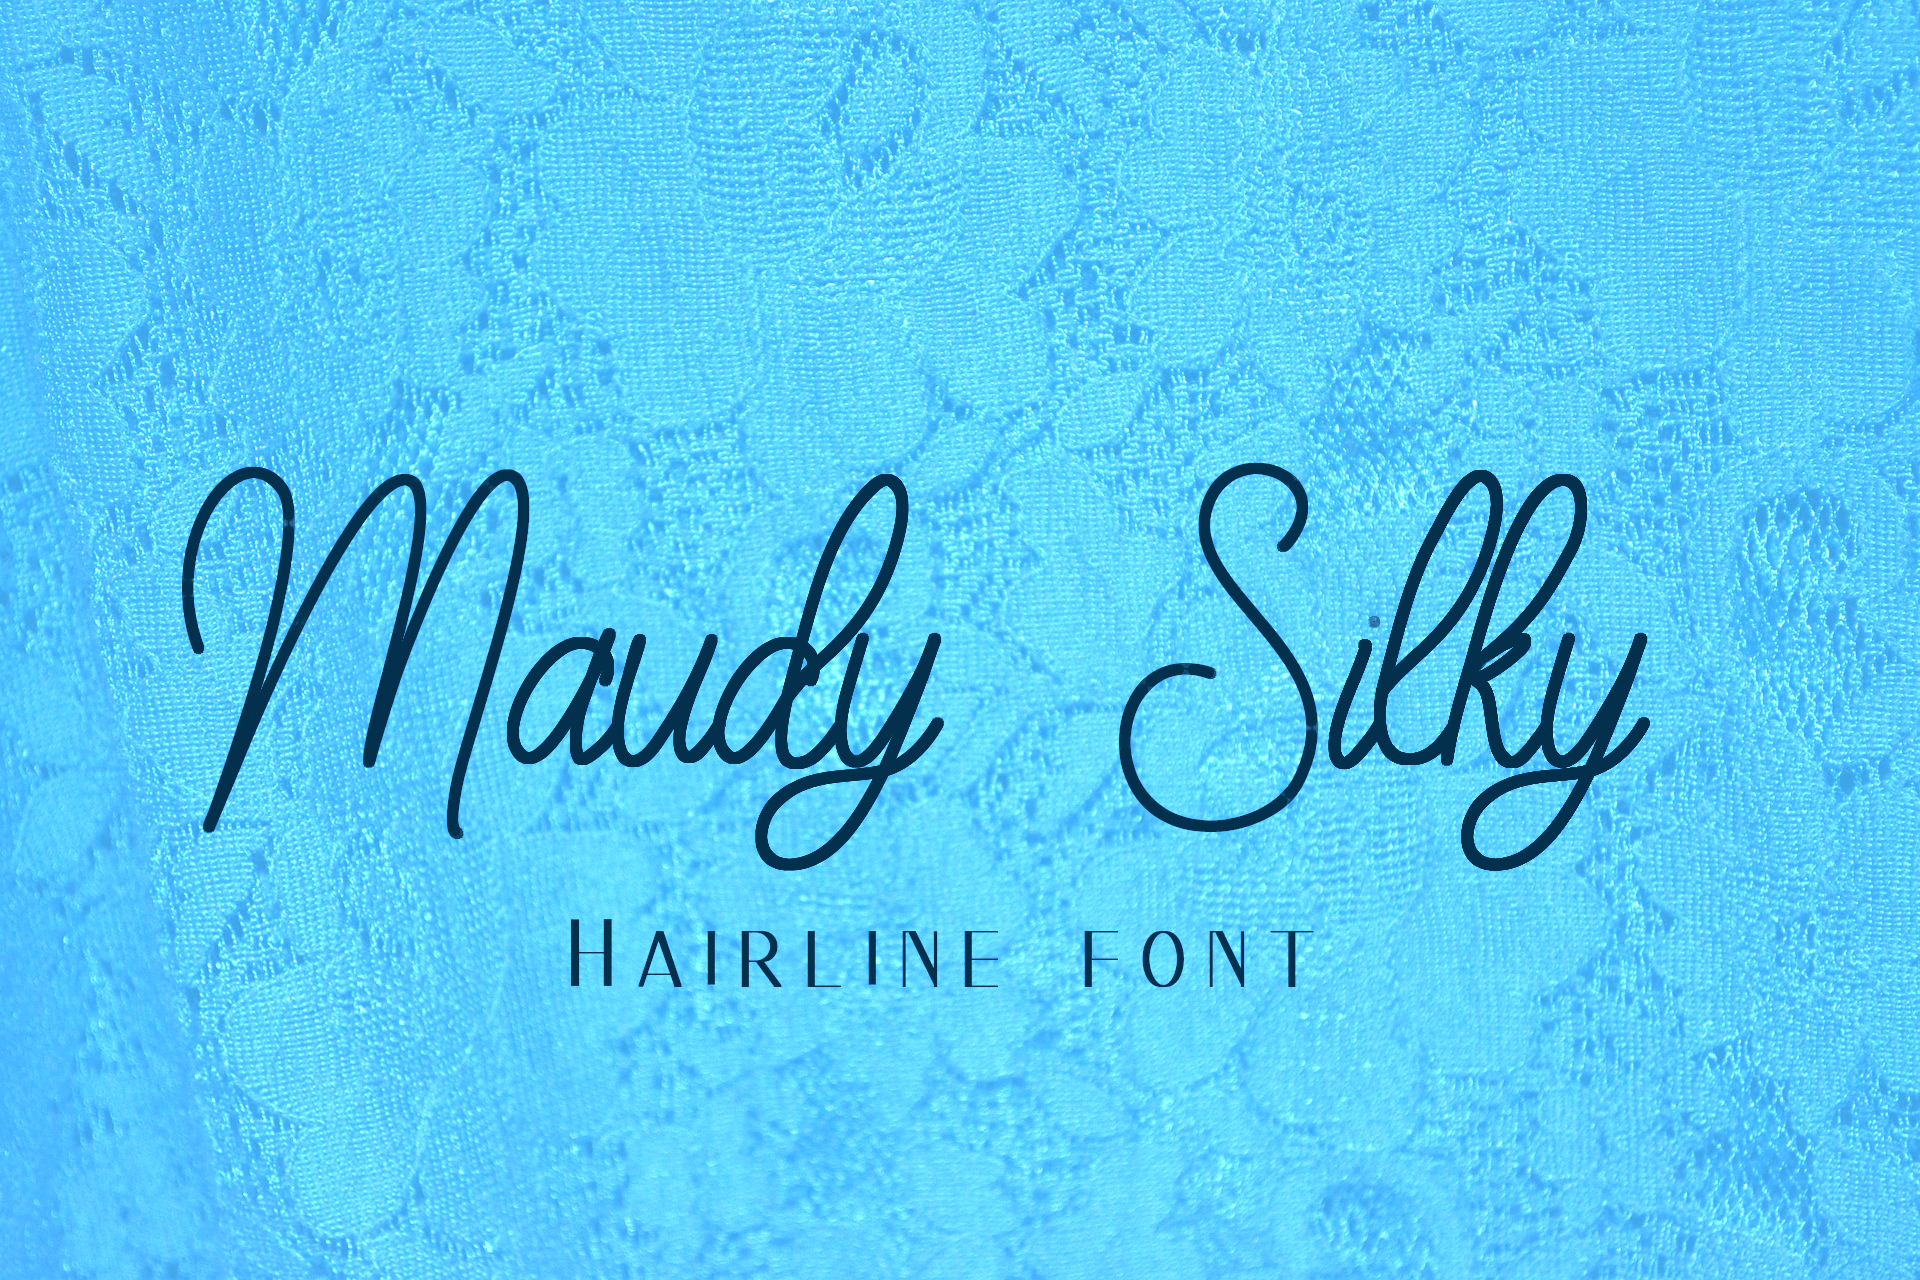 Maudy_silky_line